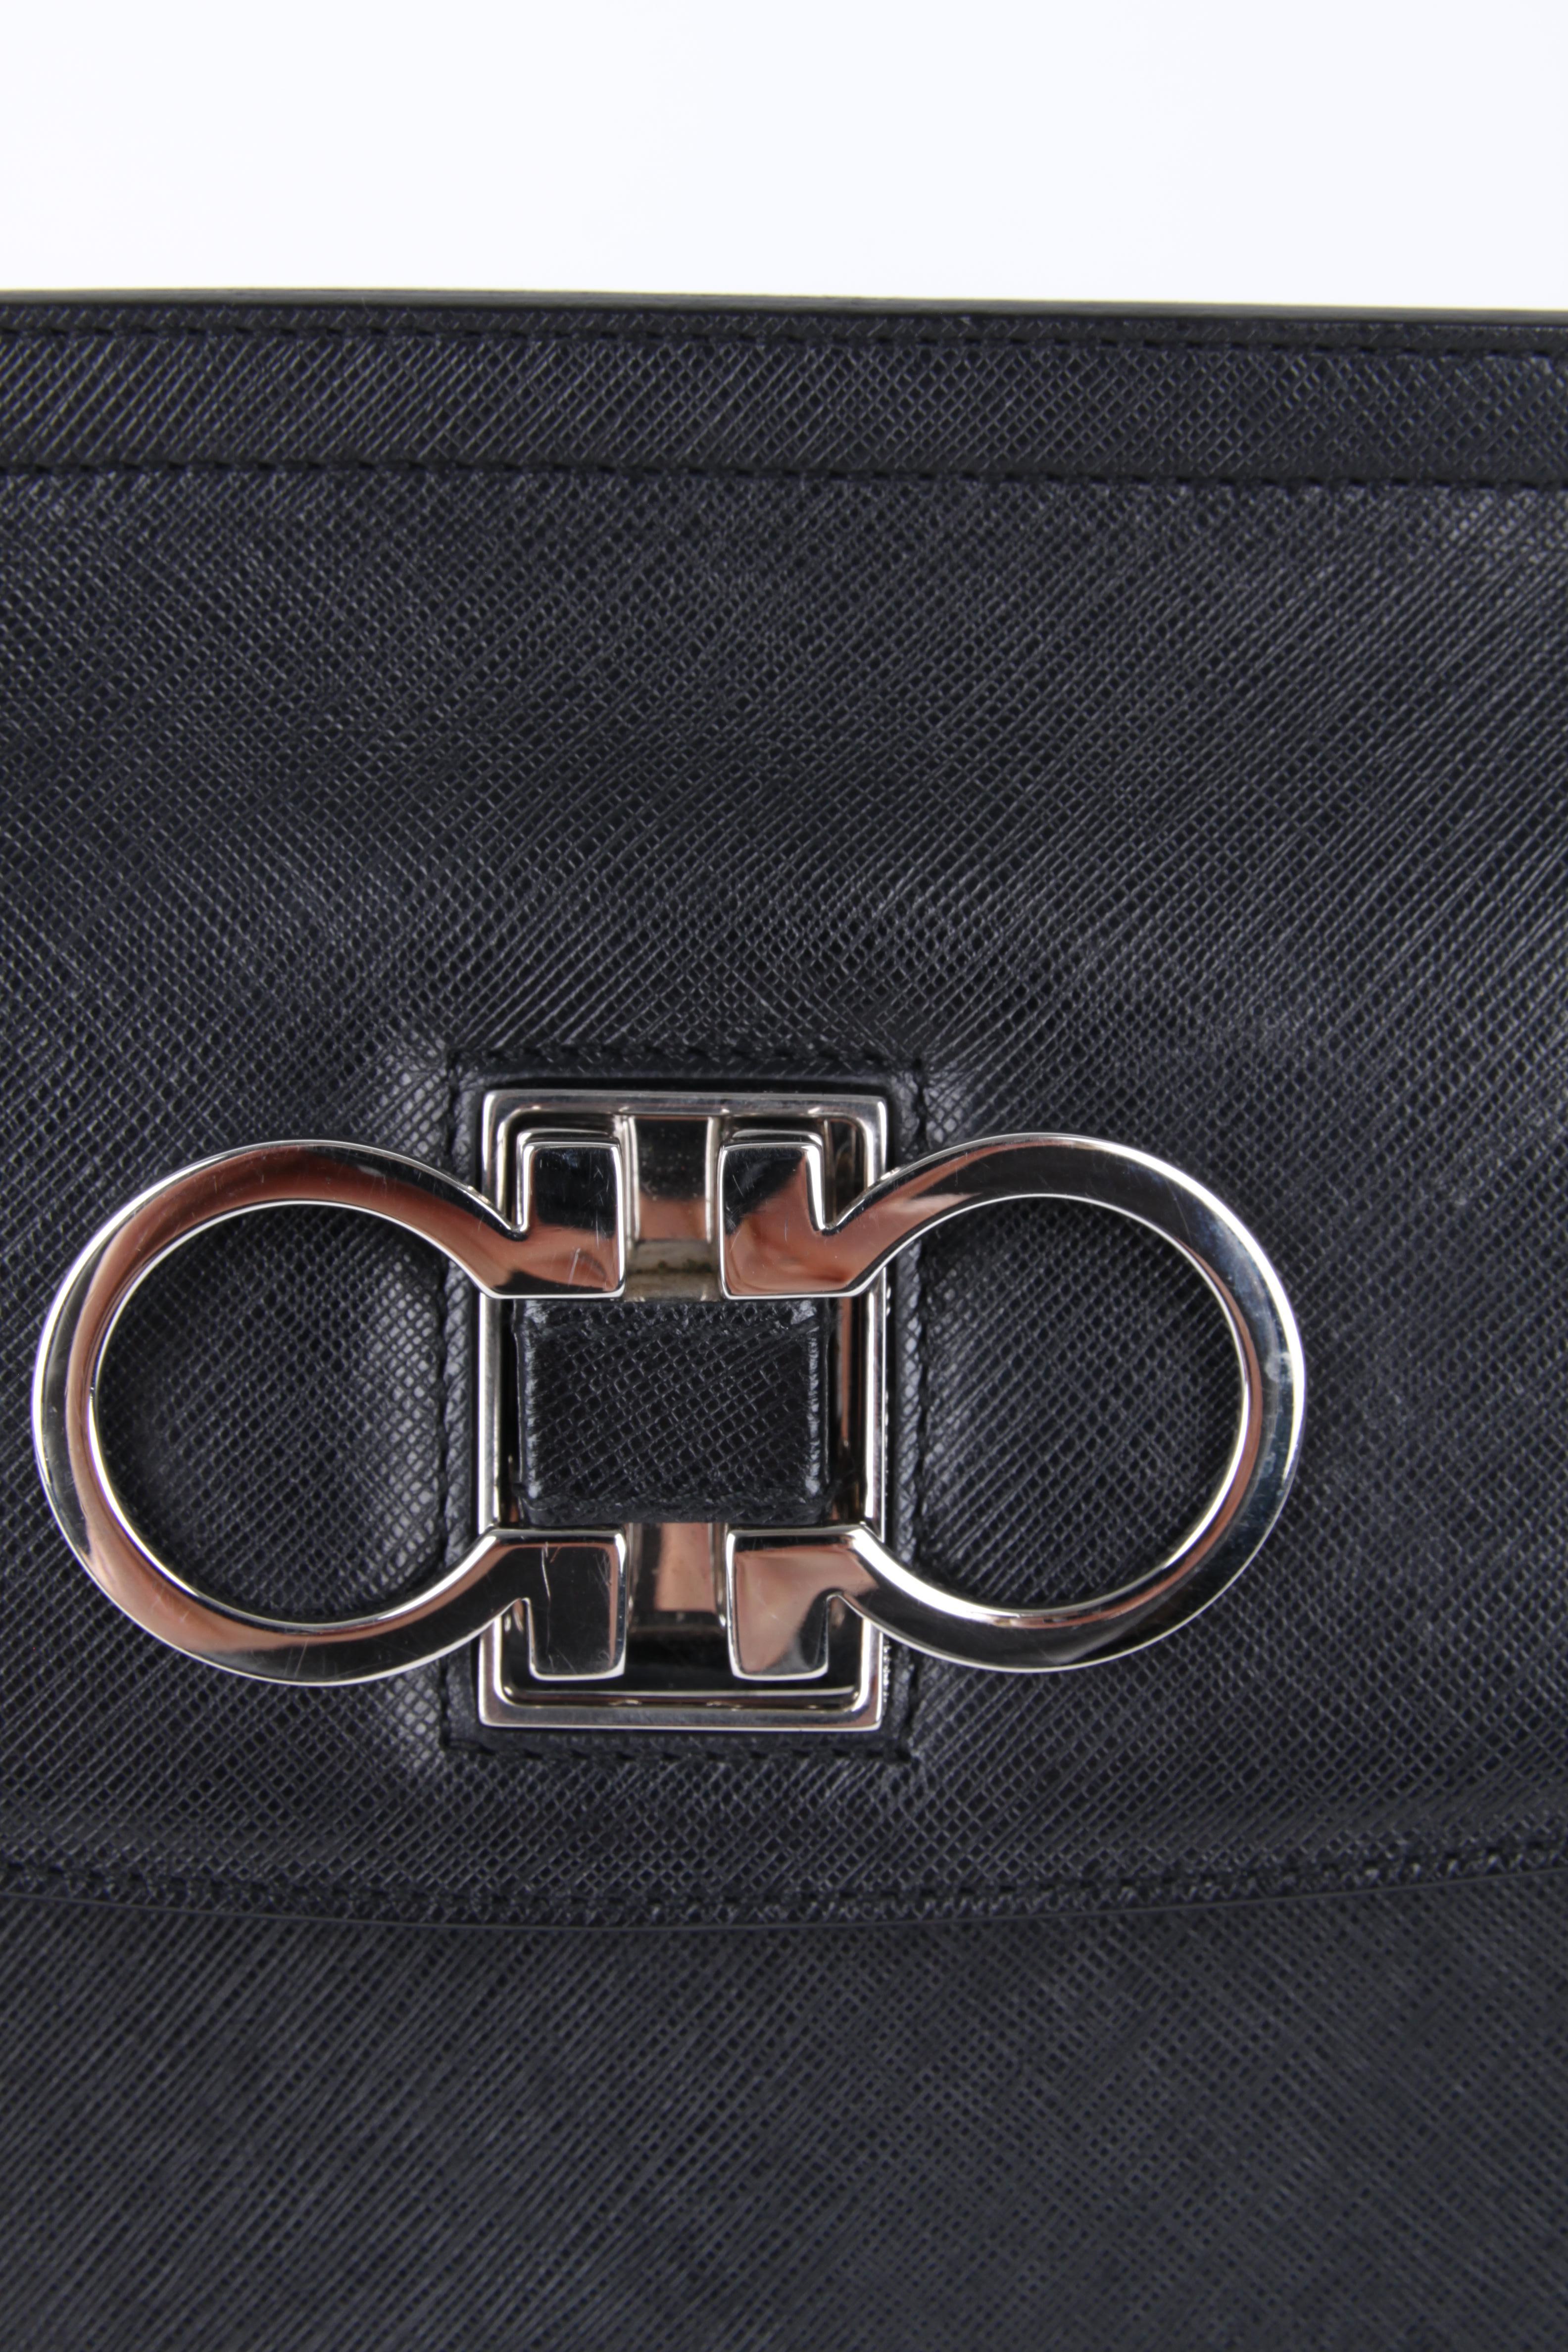 Black   Salvatore Ferragamo Logo Plaque Leather Clutch Handbag    For Sale